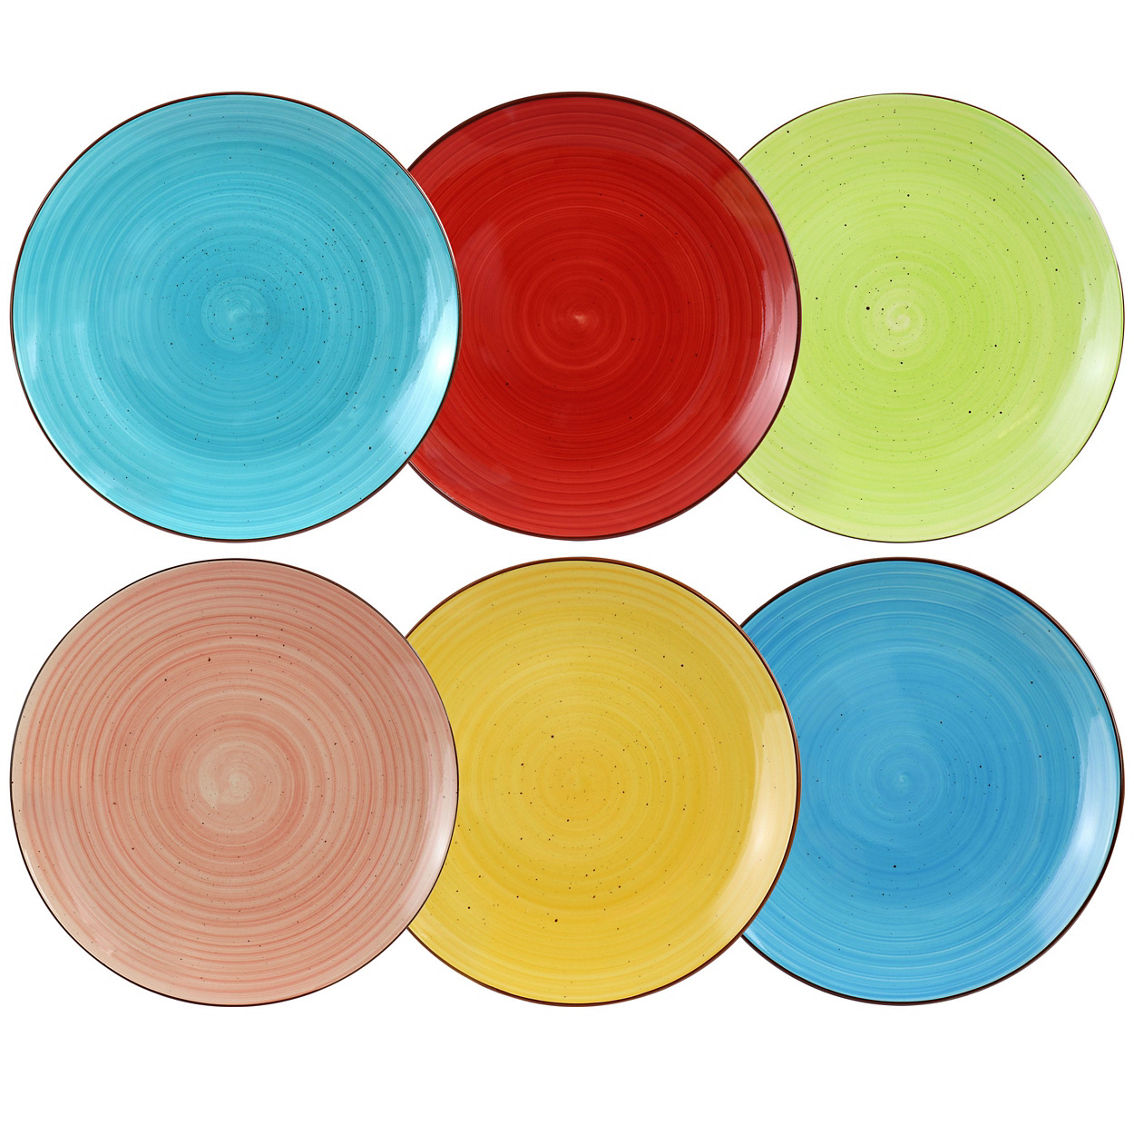 Elama Sebastian 18 Piece Double Bowl Stoneware Dinnerware Set in Assorted Colors - Image 3 of 5